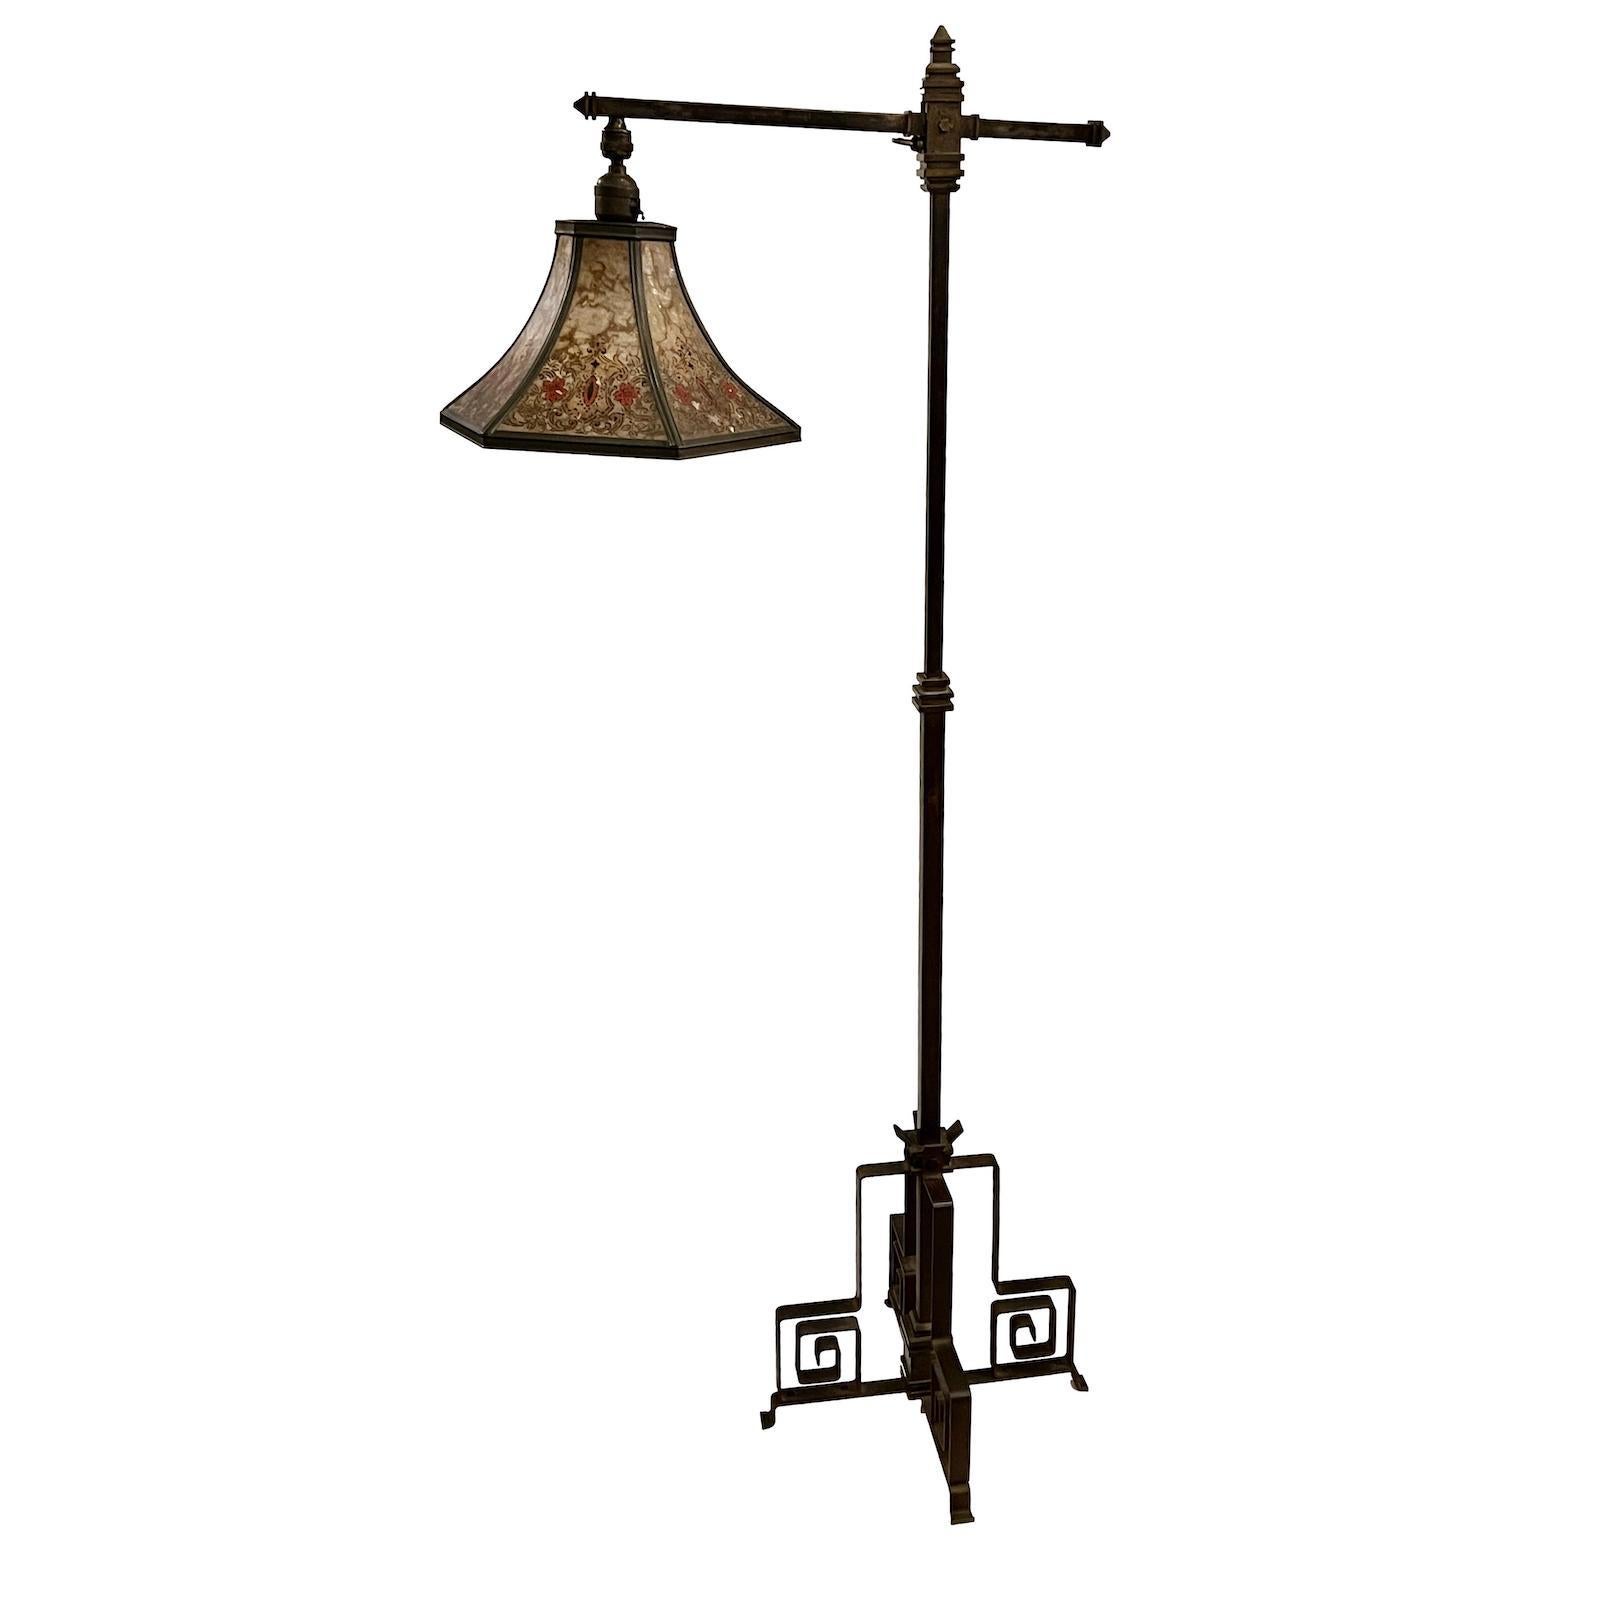 A circa 1900 English iron floor lamp with original mica shade.

Measurements:
Height: 57